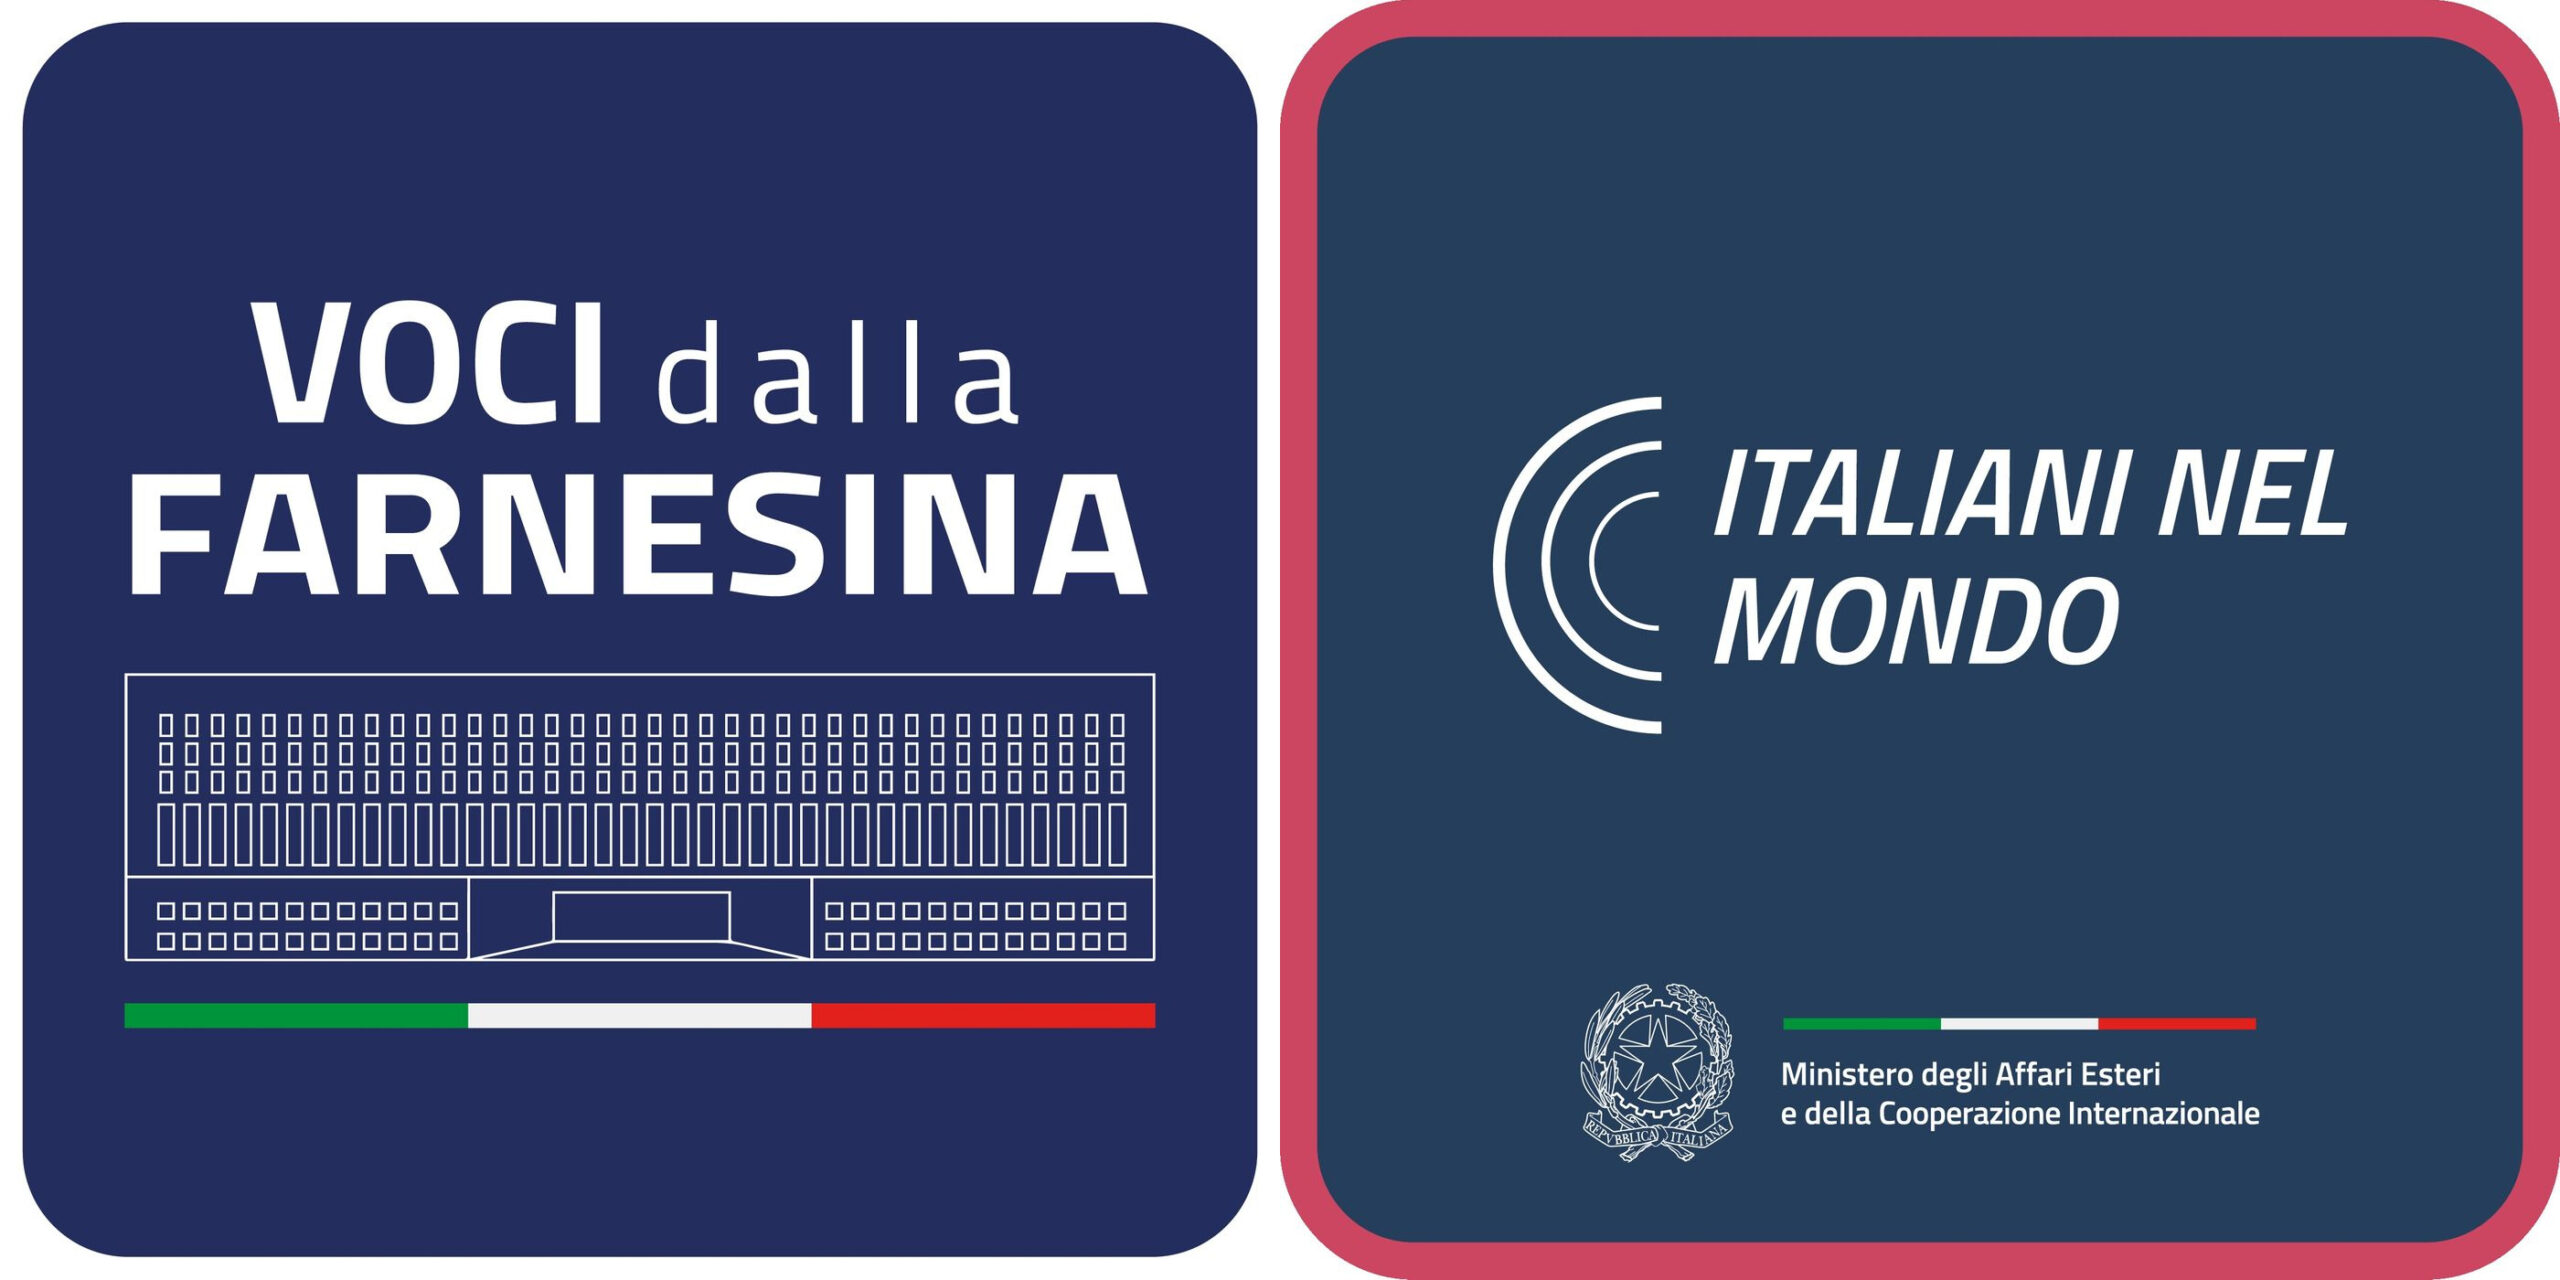 Сукоб између логотипа „Воци делла Фарнесина“ и „Италиани нел мондо“